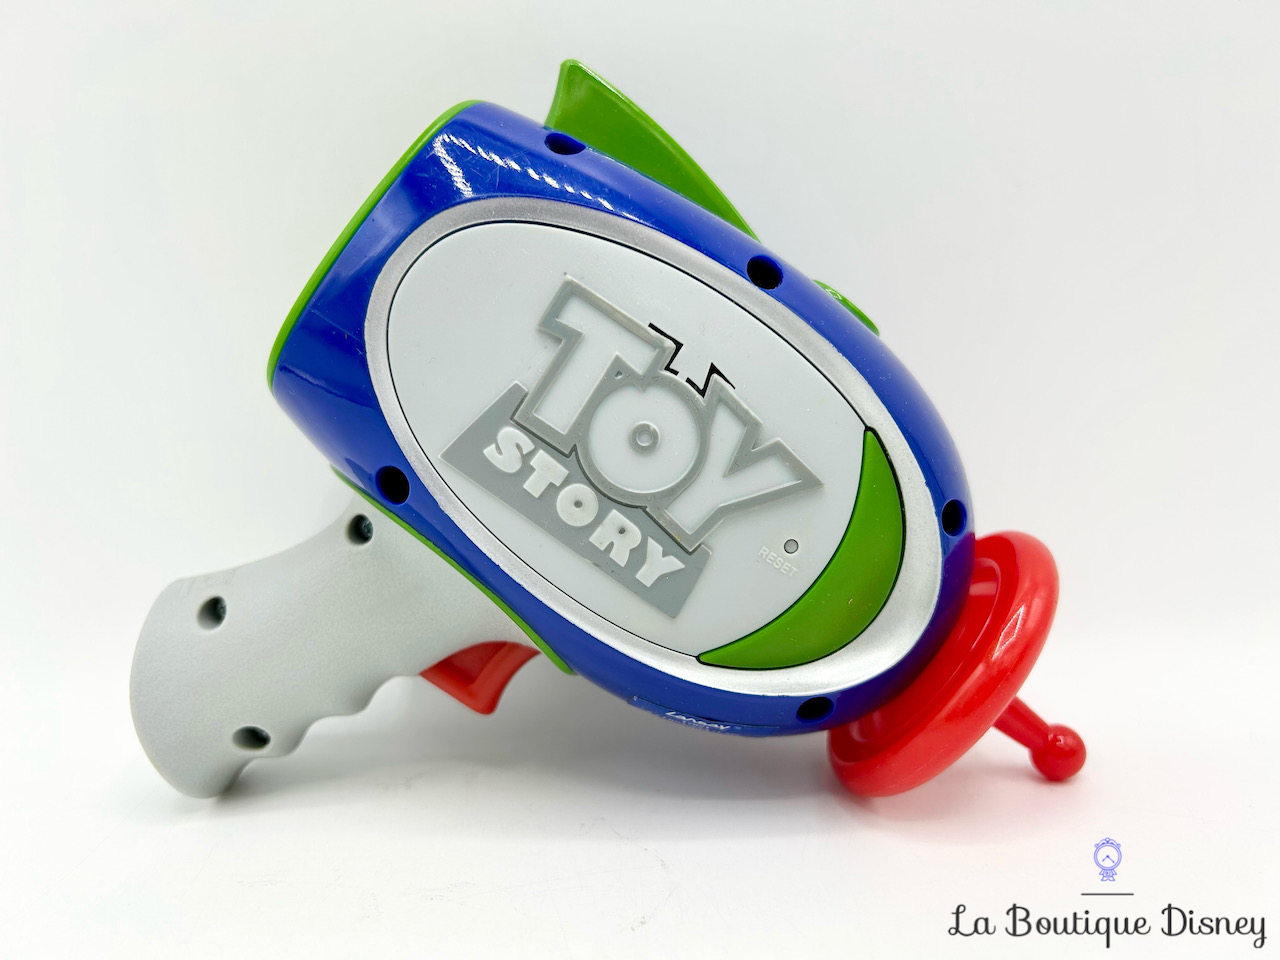 Jouet Pistolet interactif Buzzs Blaster LCD Video Game Disney Lansay Toy Story 3 Buzz léclair